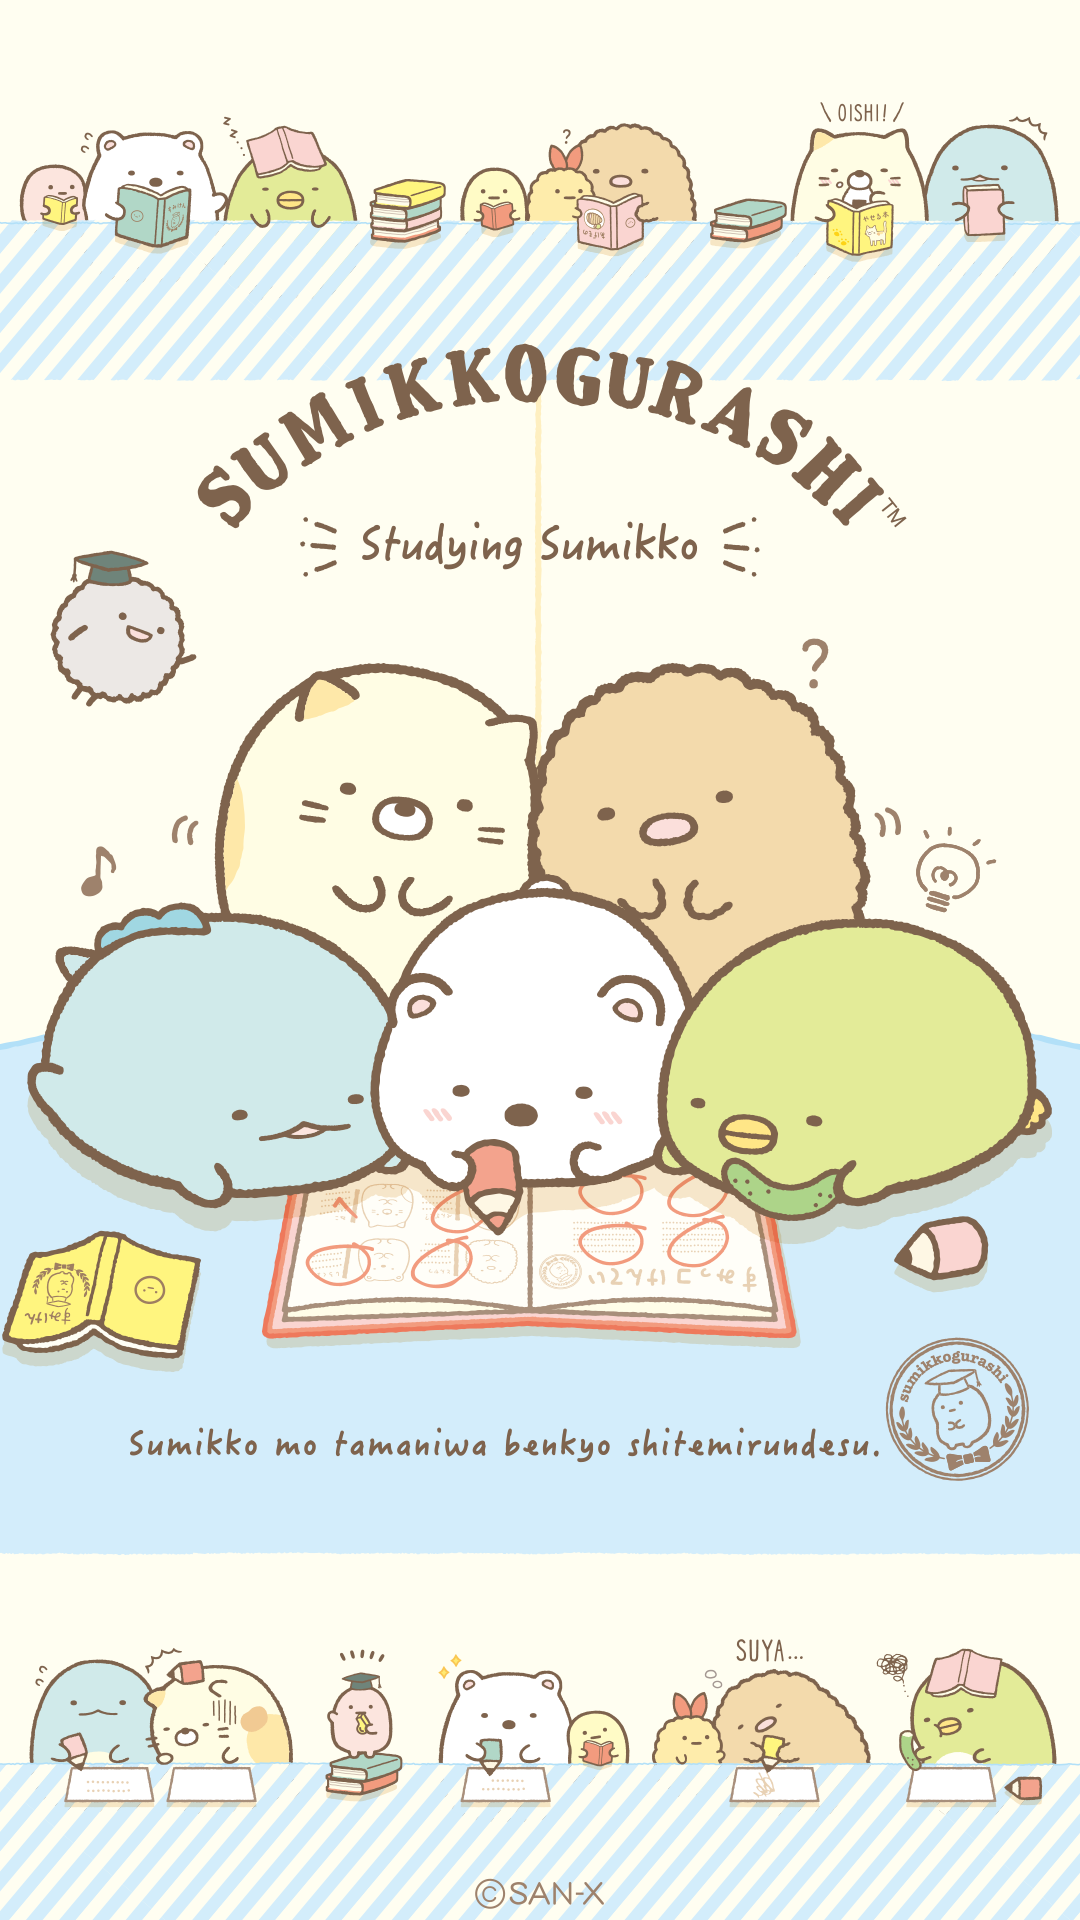 sumikko gurashi fondos de pantalla iphone,texto,dibujos animados,fuente,ilustración,niño